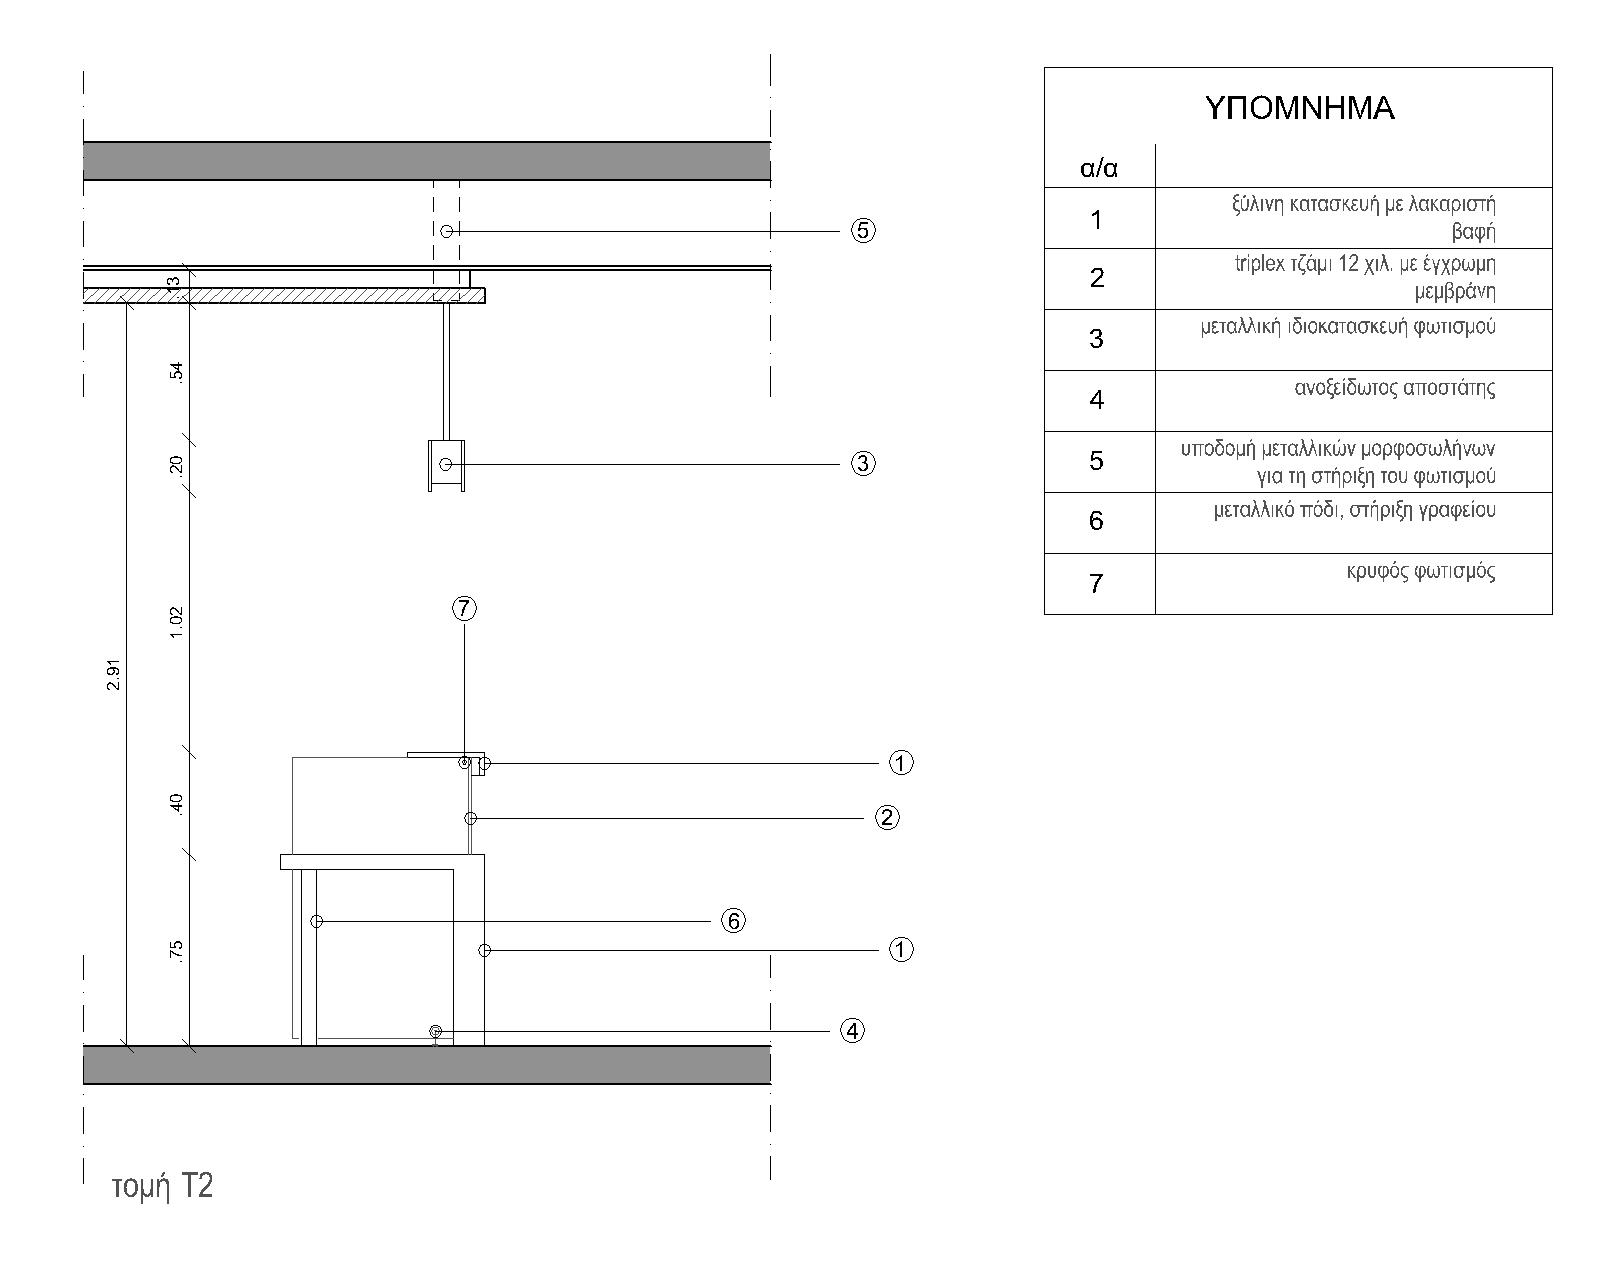 structural section Τ2 - Κατασκευαστική Τομή Τ2